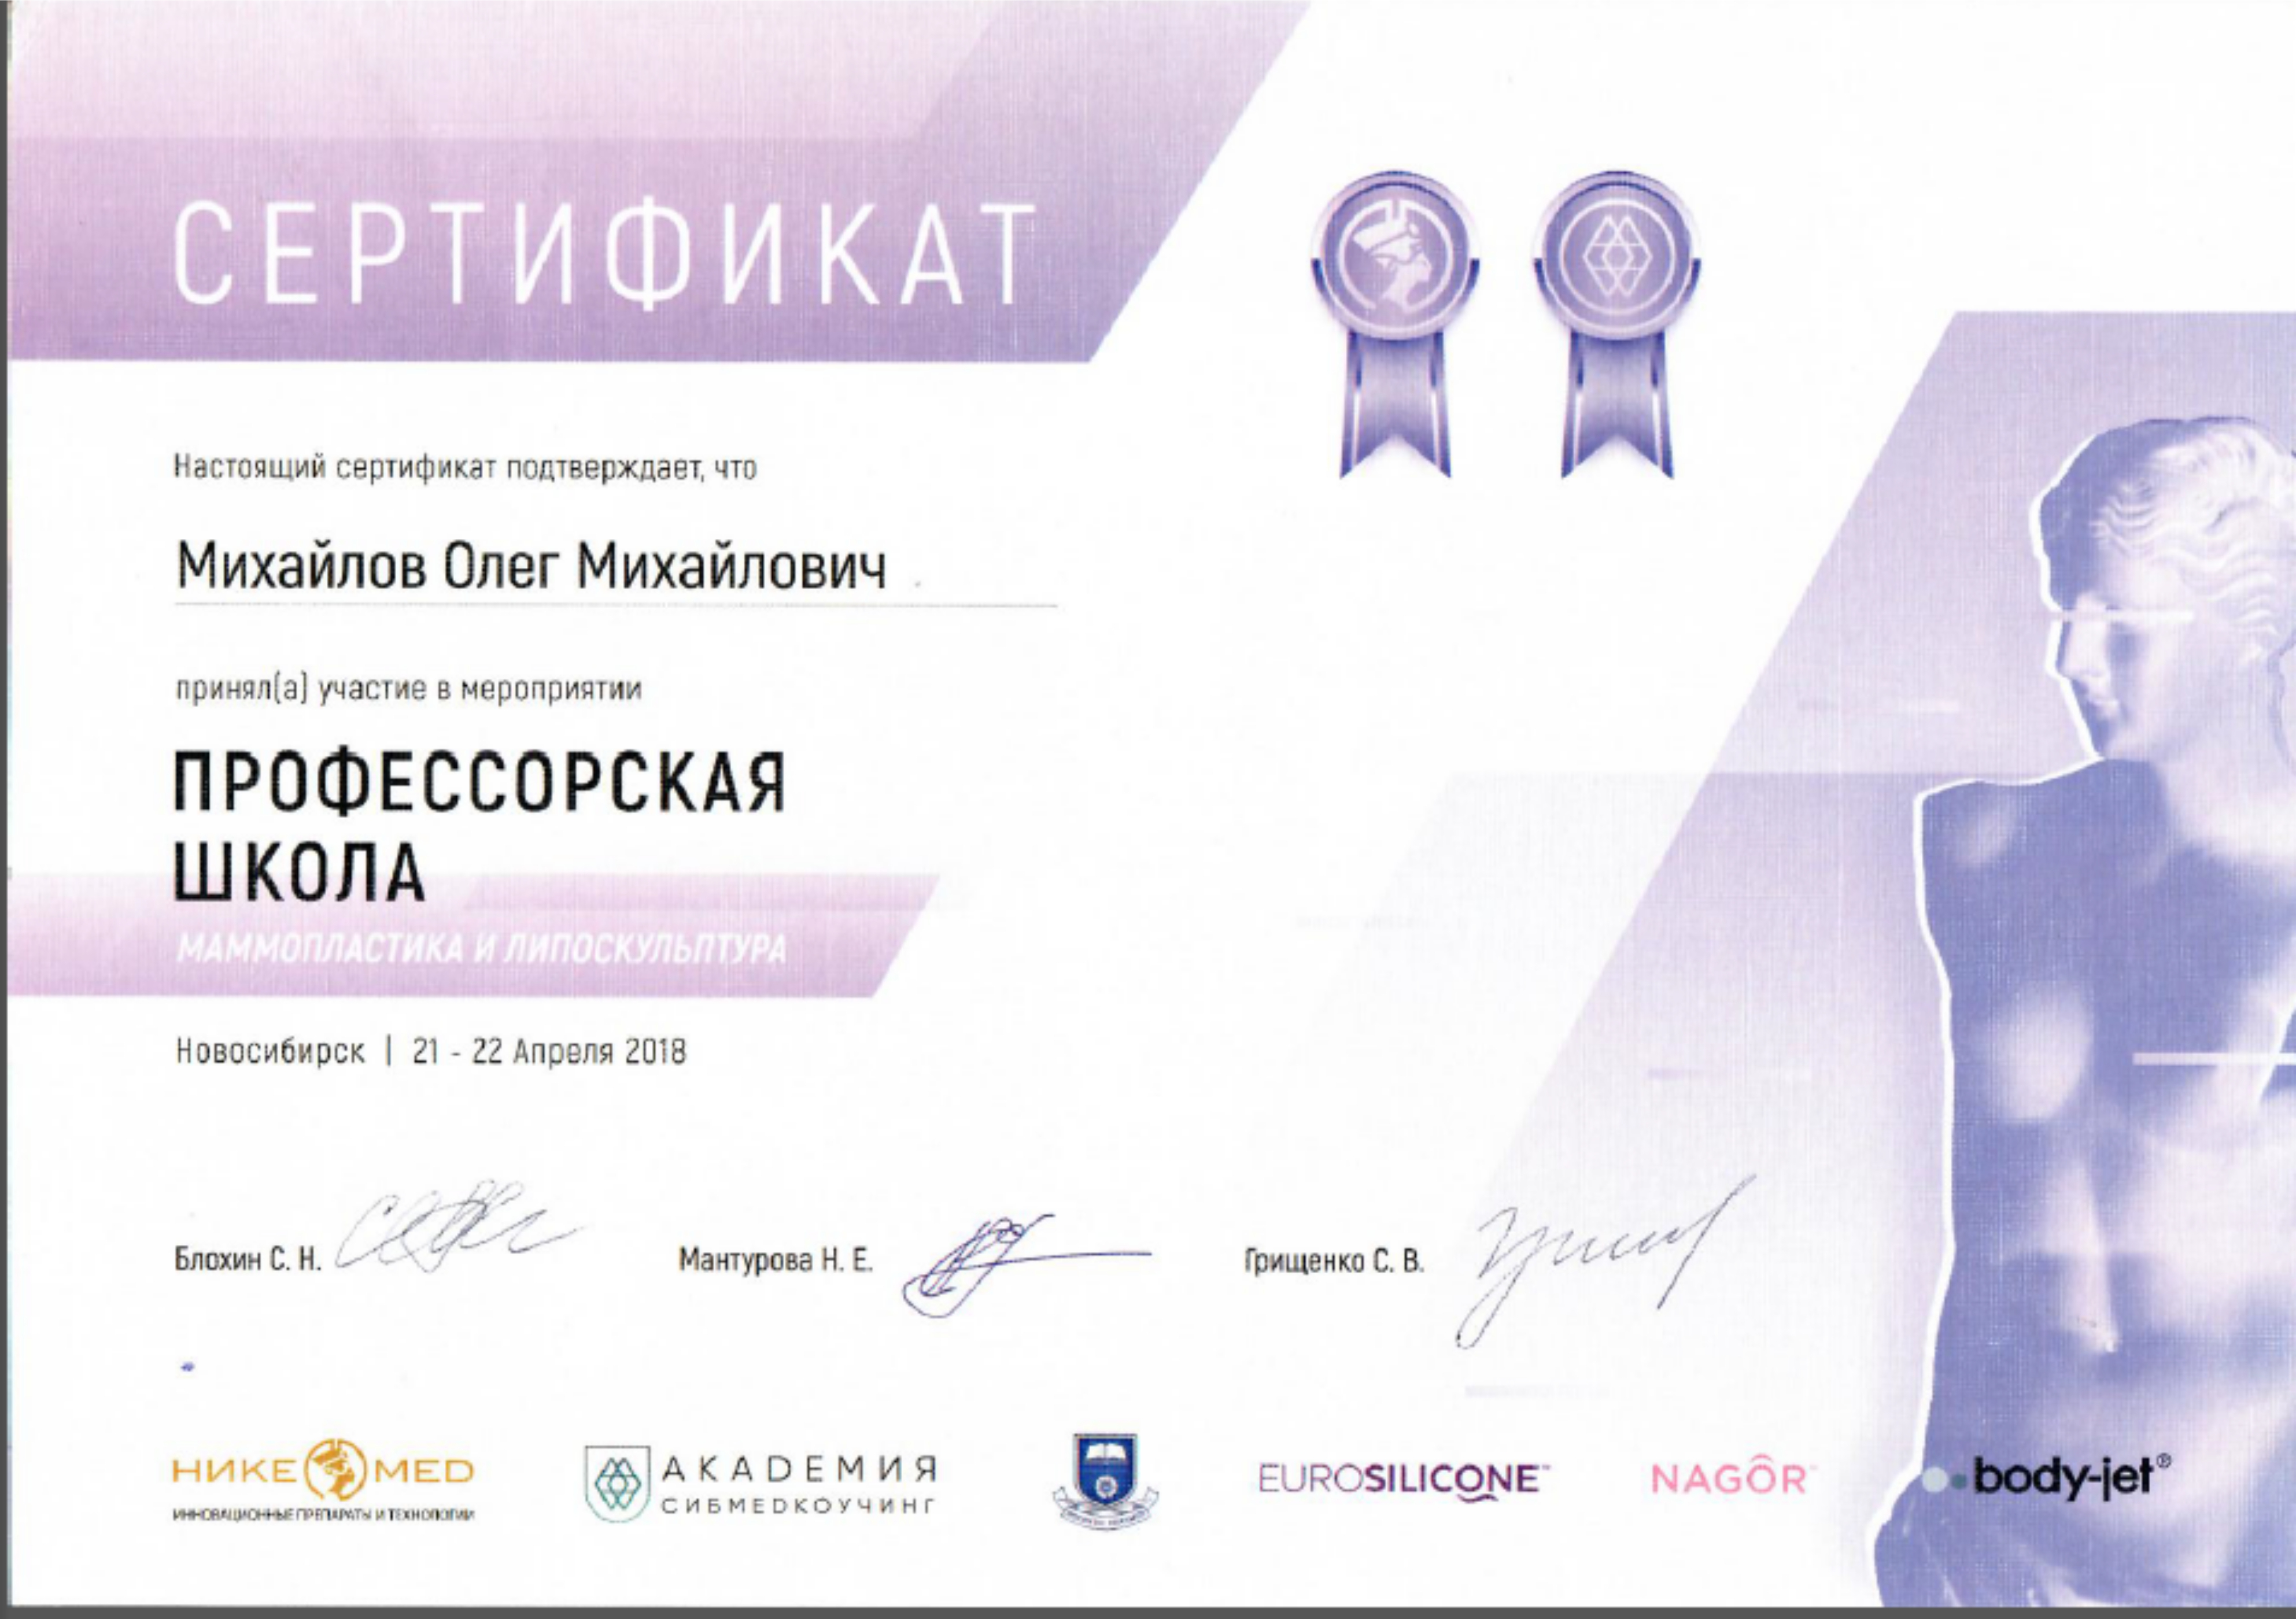 Сертификат "Маммопластика и липоскульптура". 2018 г.